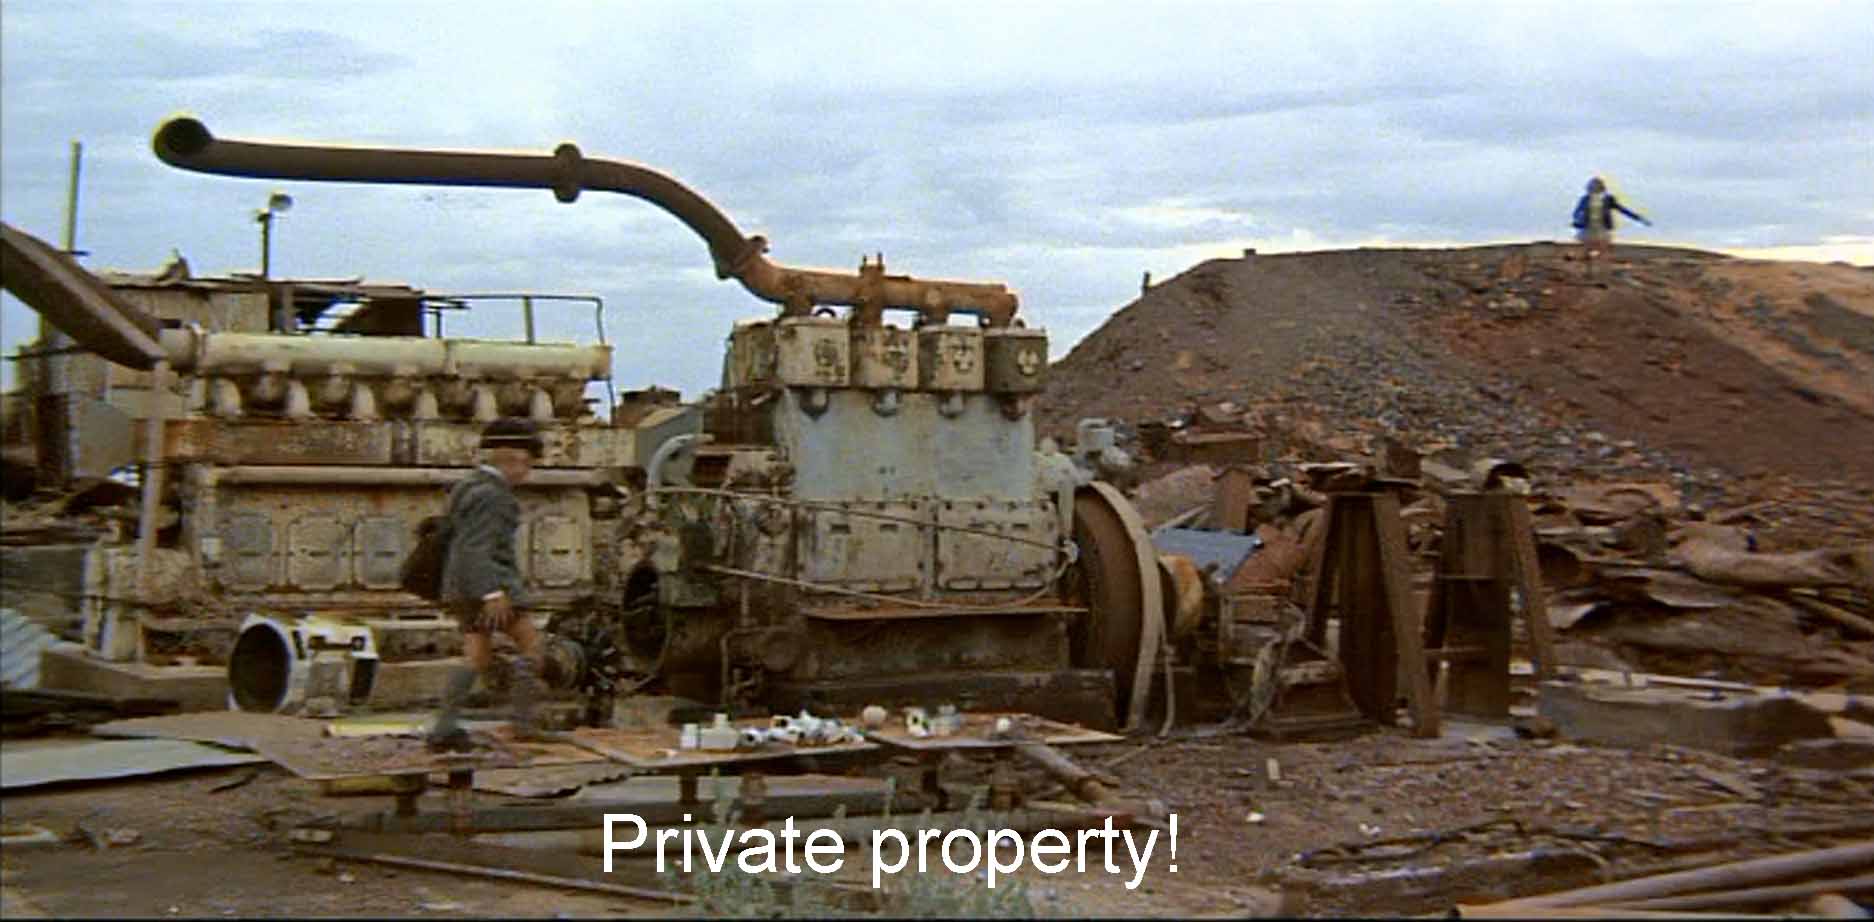 Private property!